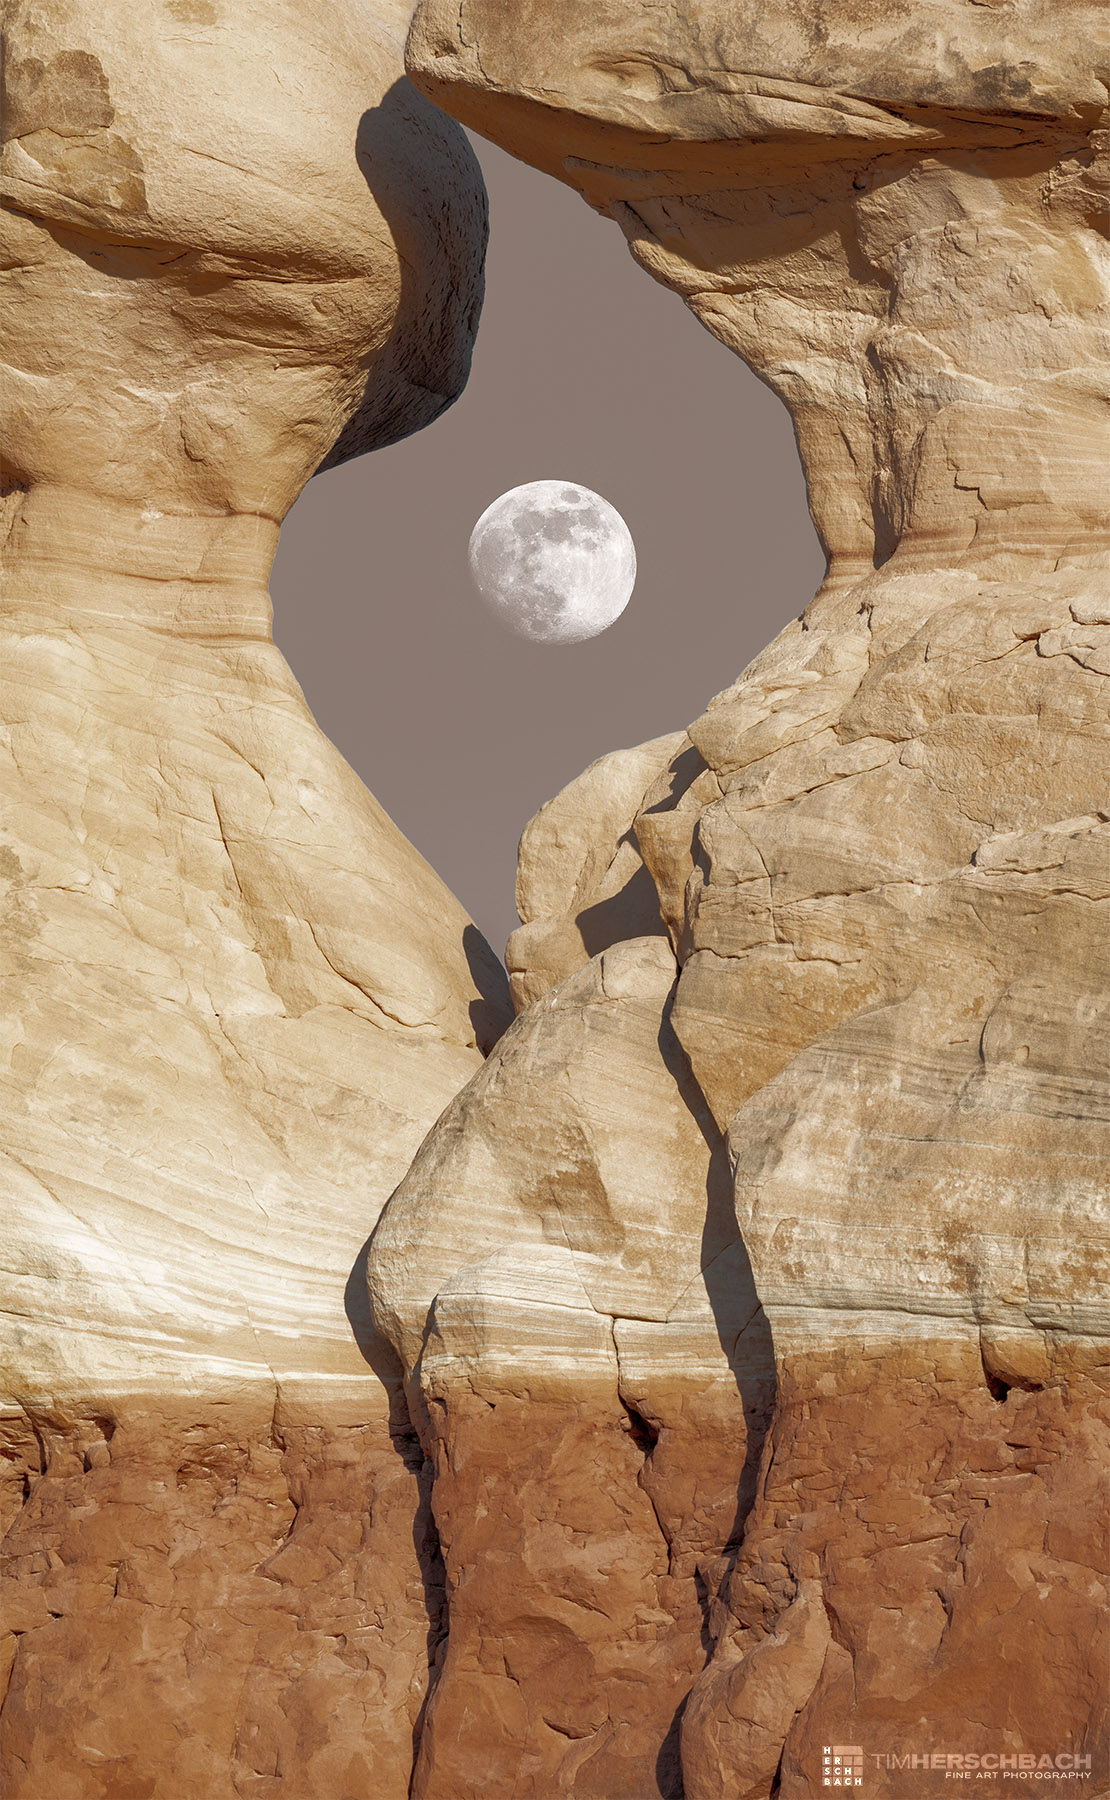 Moon rising through a sandstone window in the desert of Utah